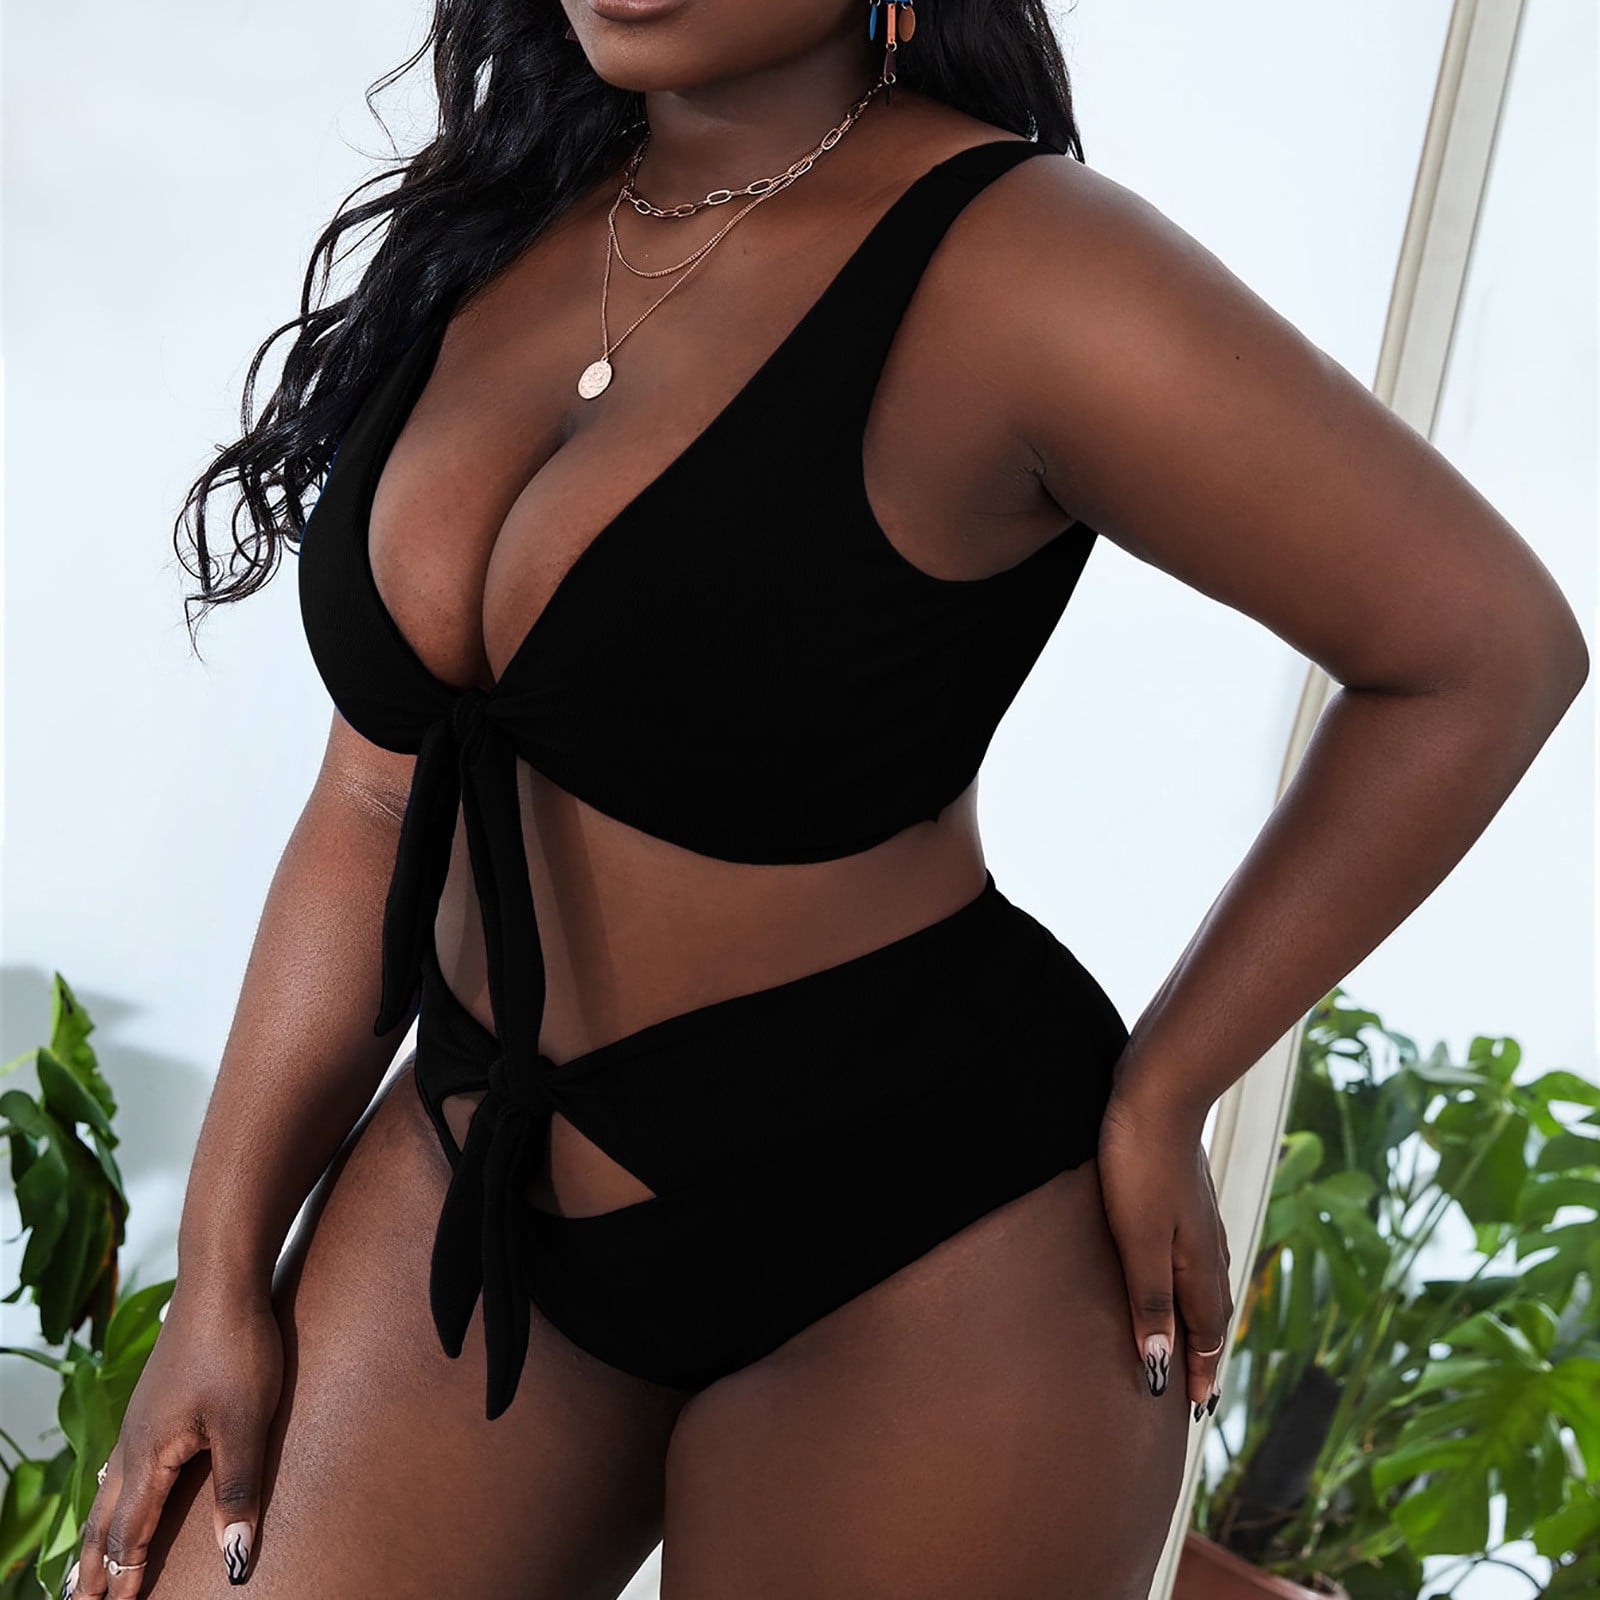 darragh murray recommends Sexy Black Woman Bikini